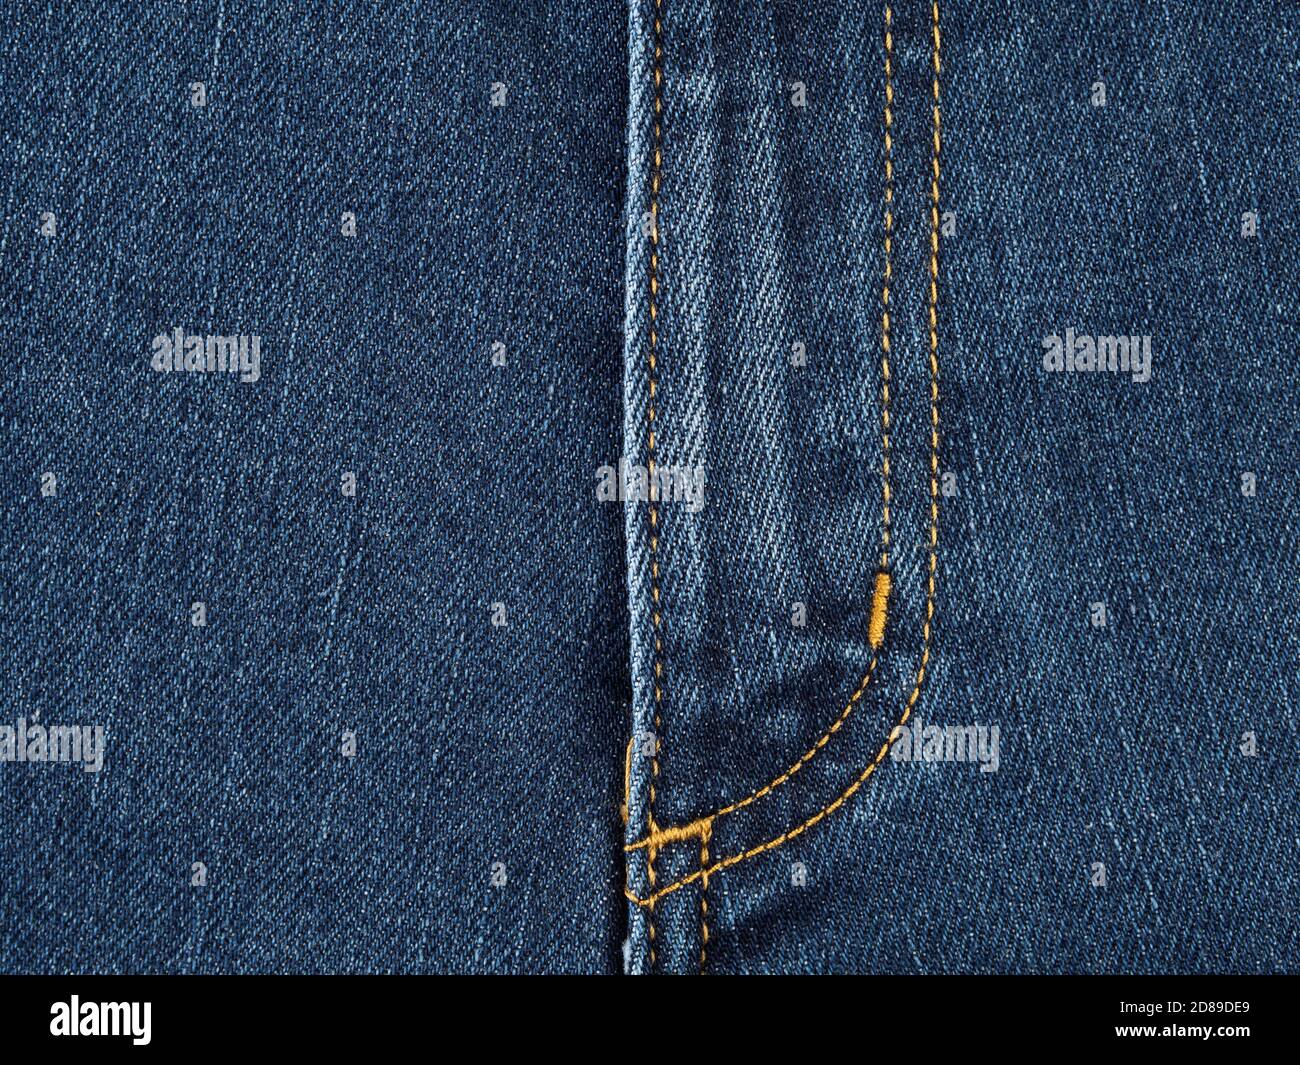 Denim jeans fly closeup background Stock Photo - Alamy